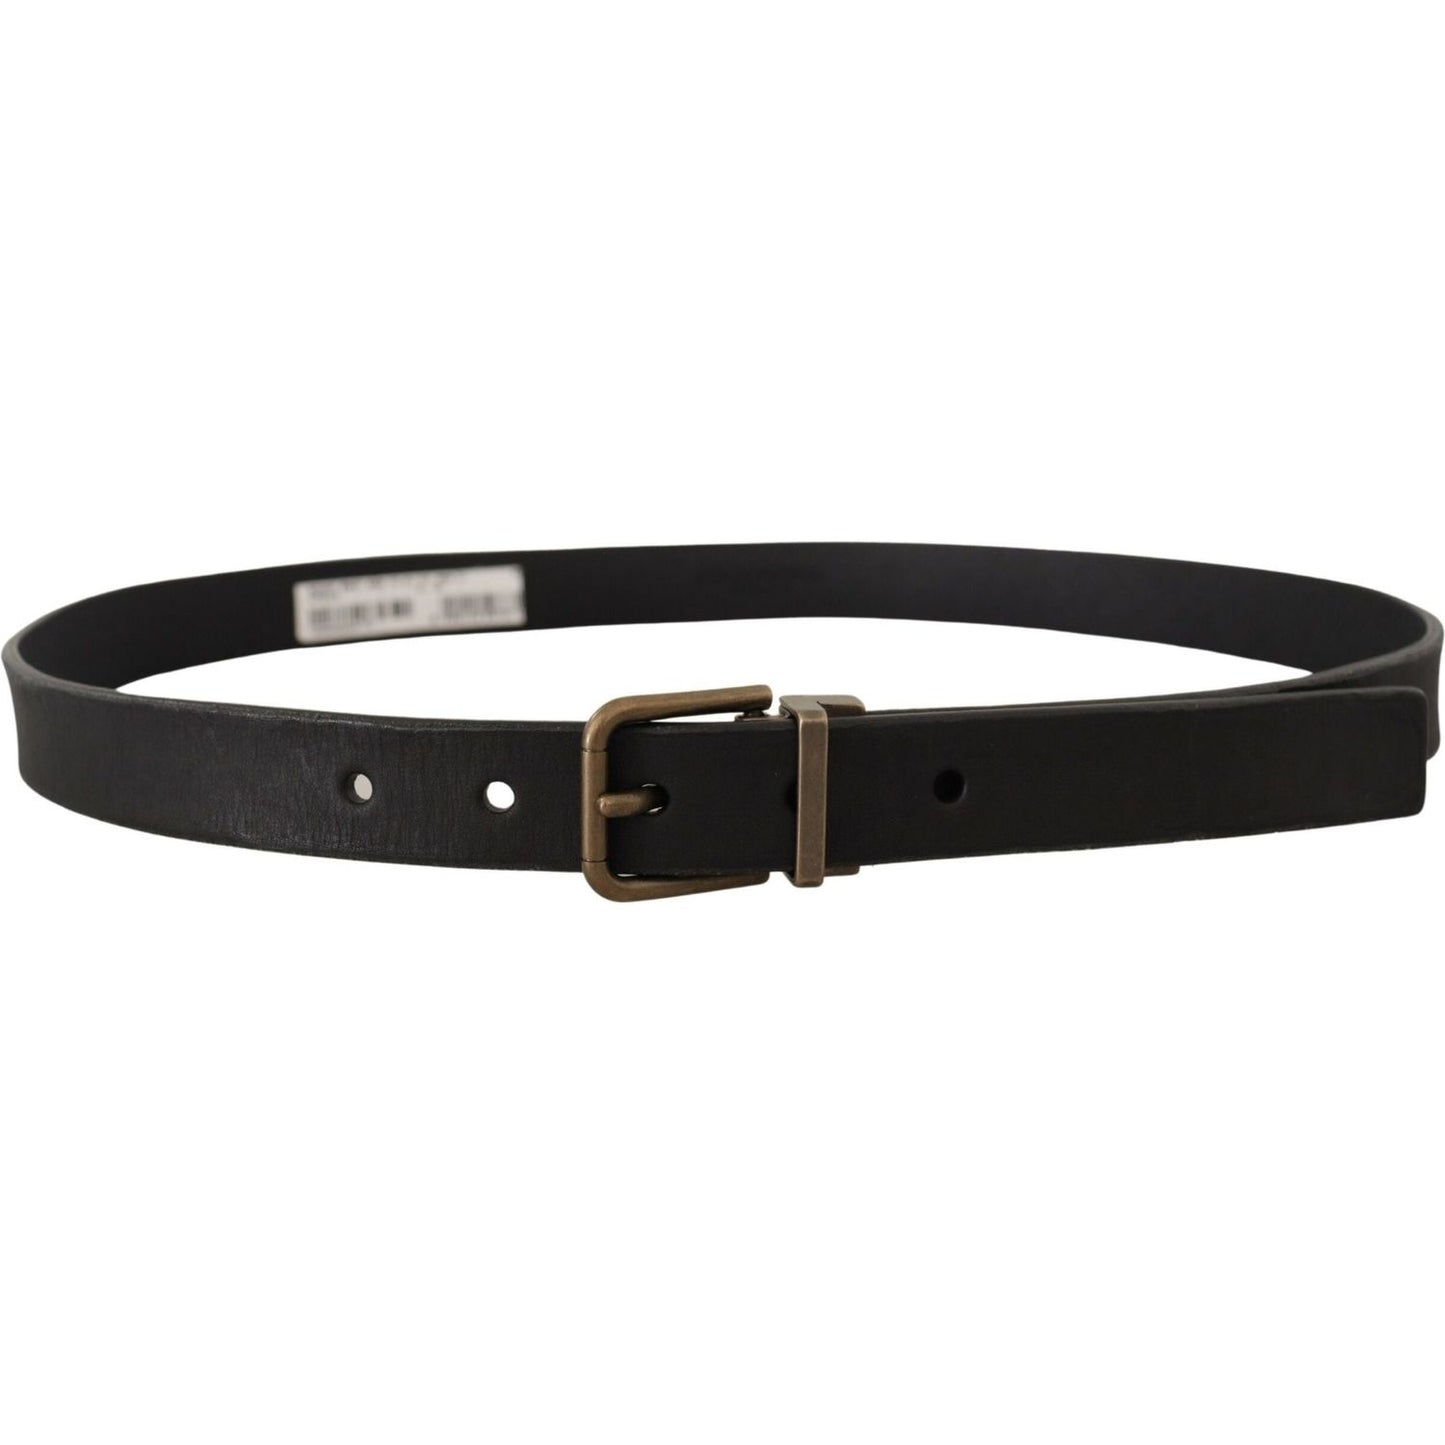 Dolce & Gabbana Elegant Black Leather Belt with Vintage Metal Buckle black-leather-brass-metal-grain-buckle-classic-belt